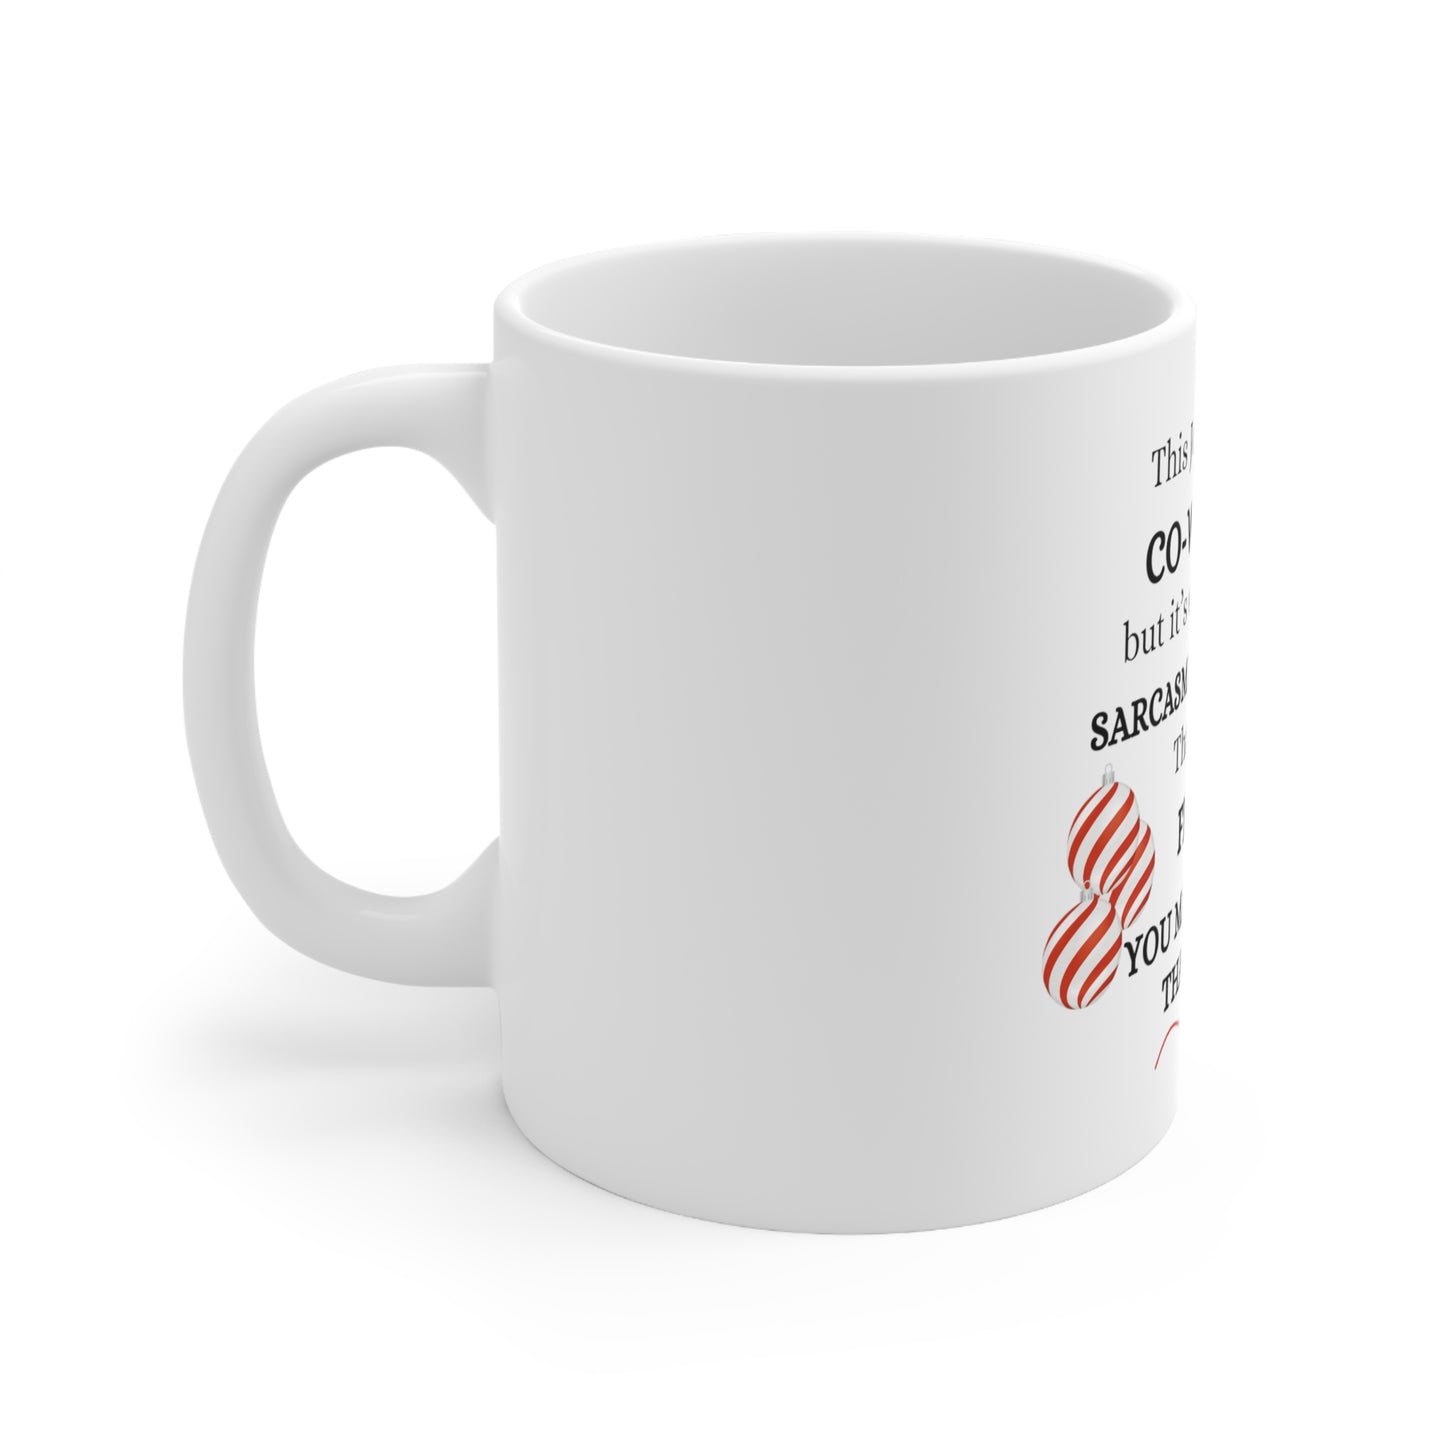 Co-Workers |Ceramic Mug 11oz